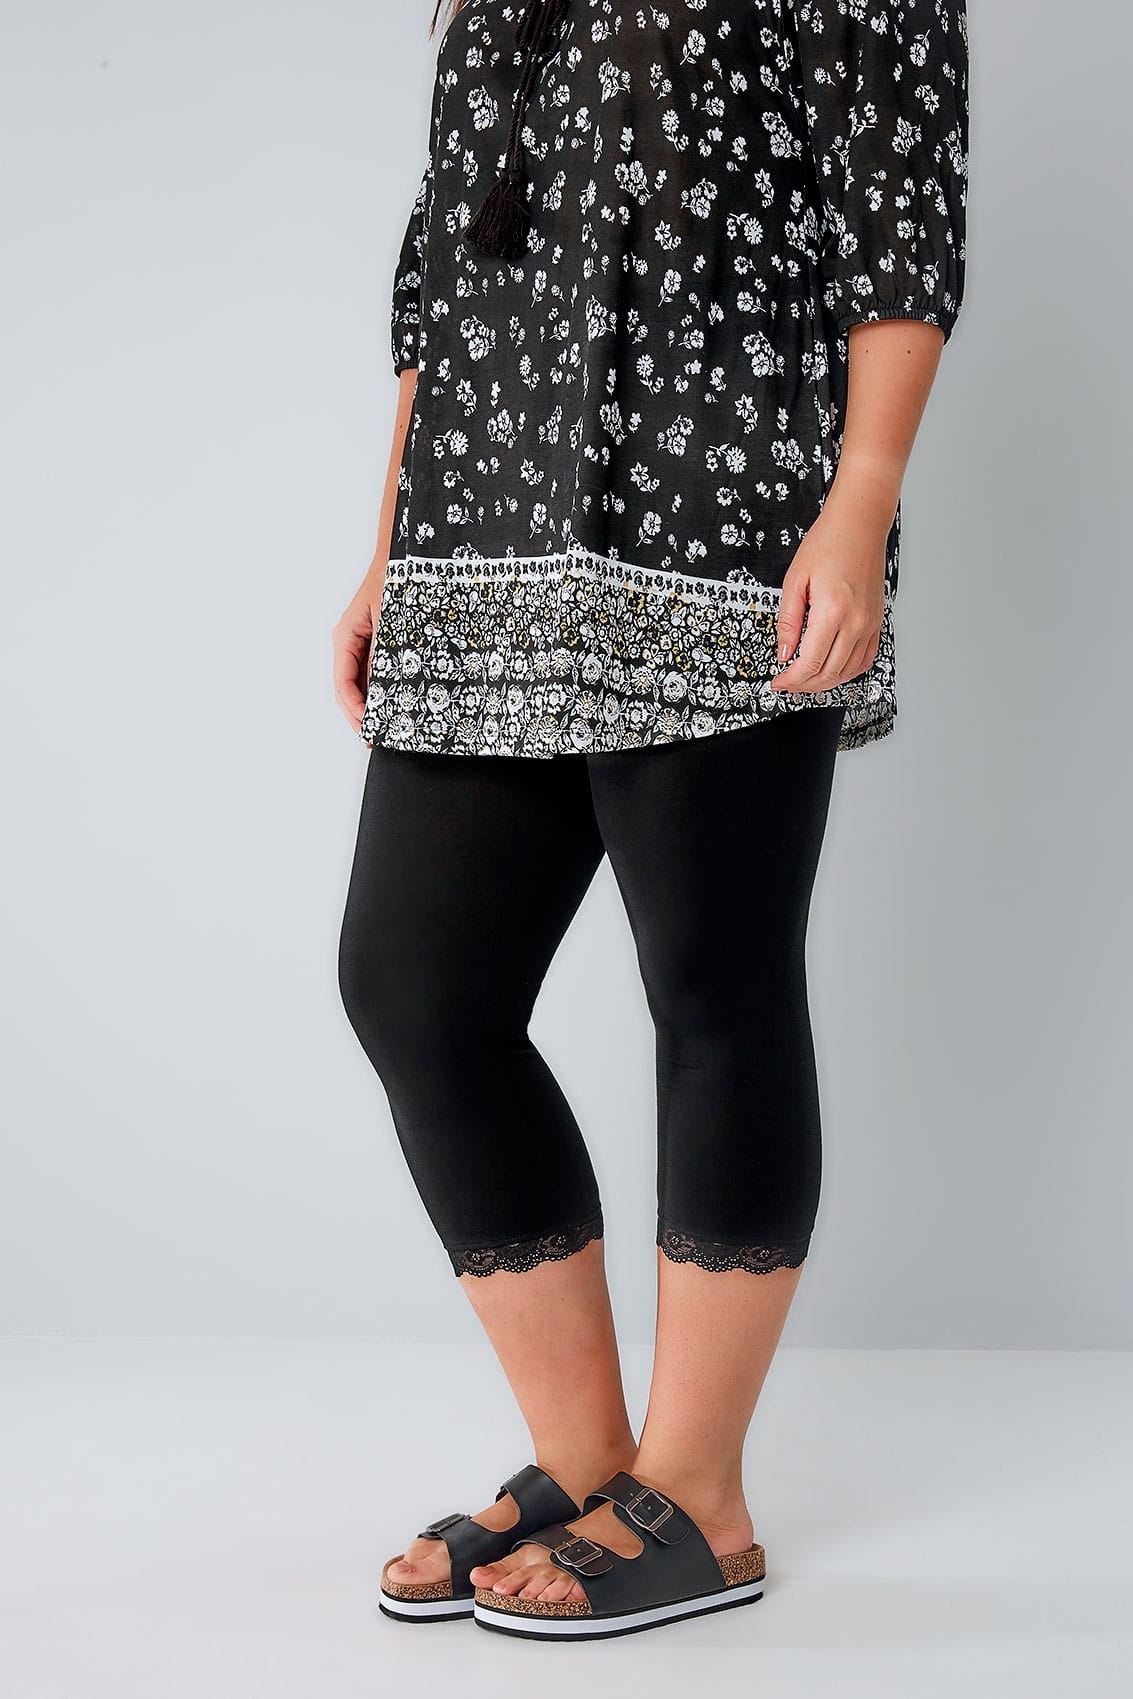 Black Cotton Elastane Crop Legging With Lace Trim Plus Size 16 to 321133 x 1699